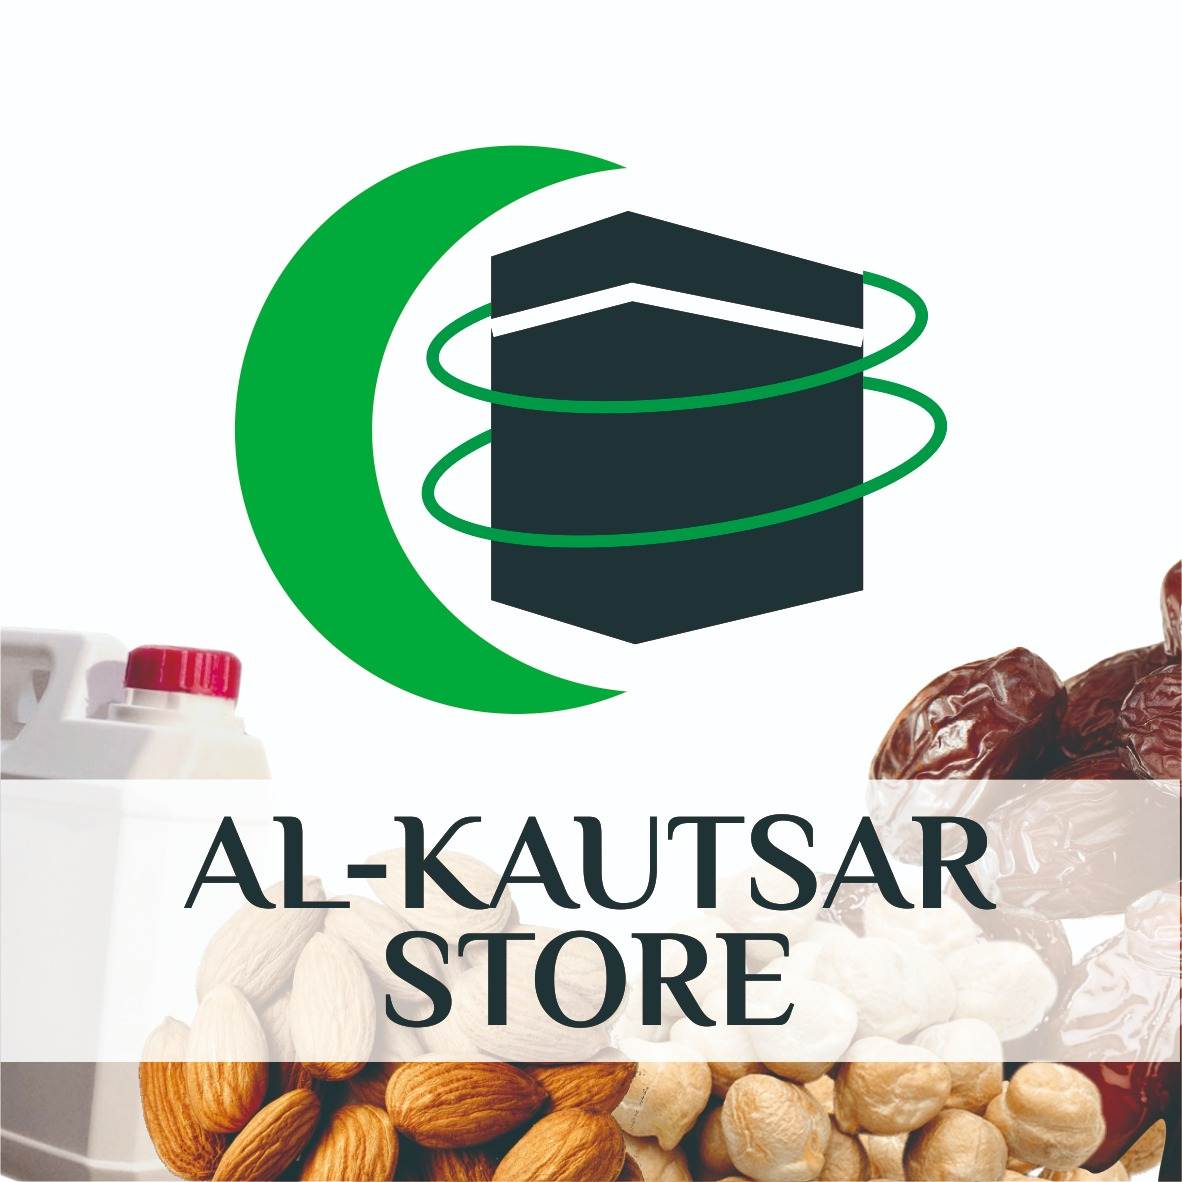 Al-Kautsar Store